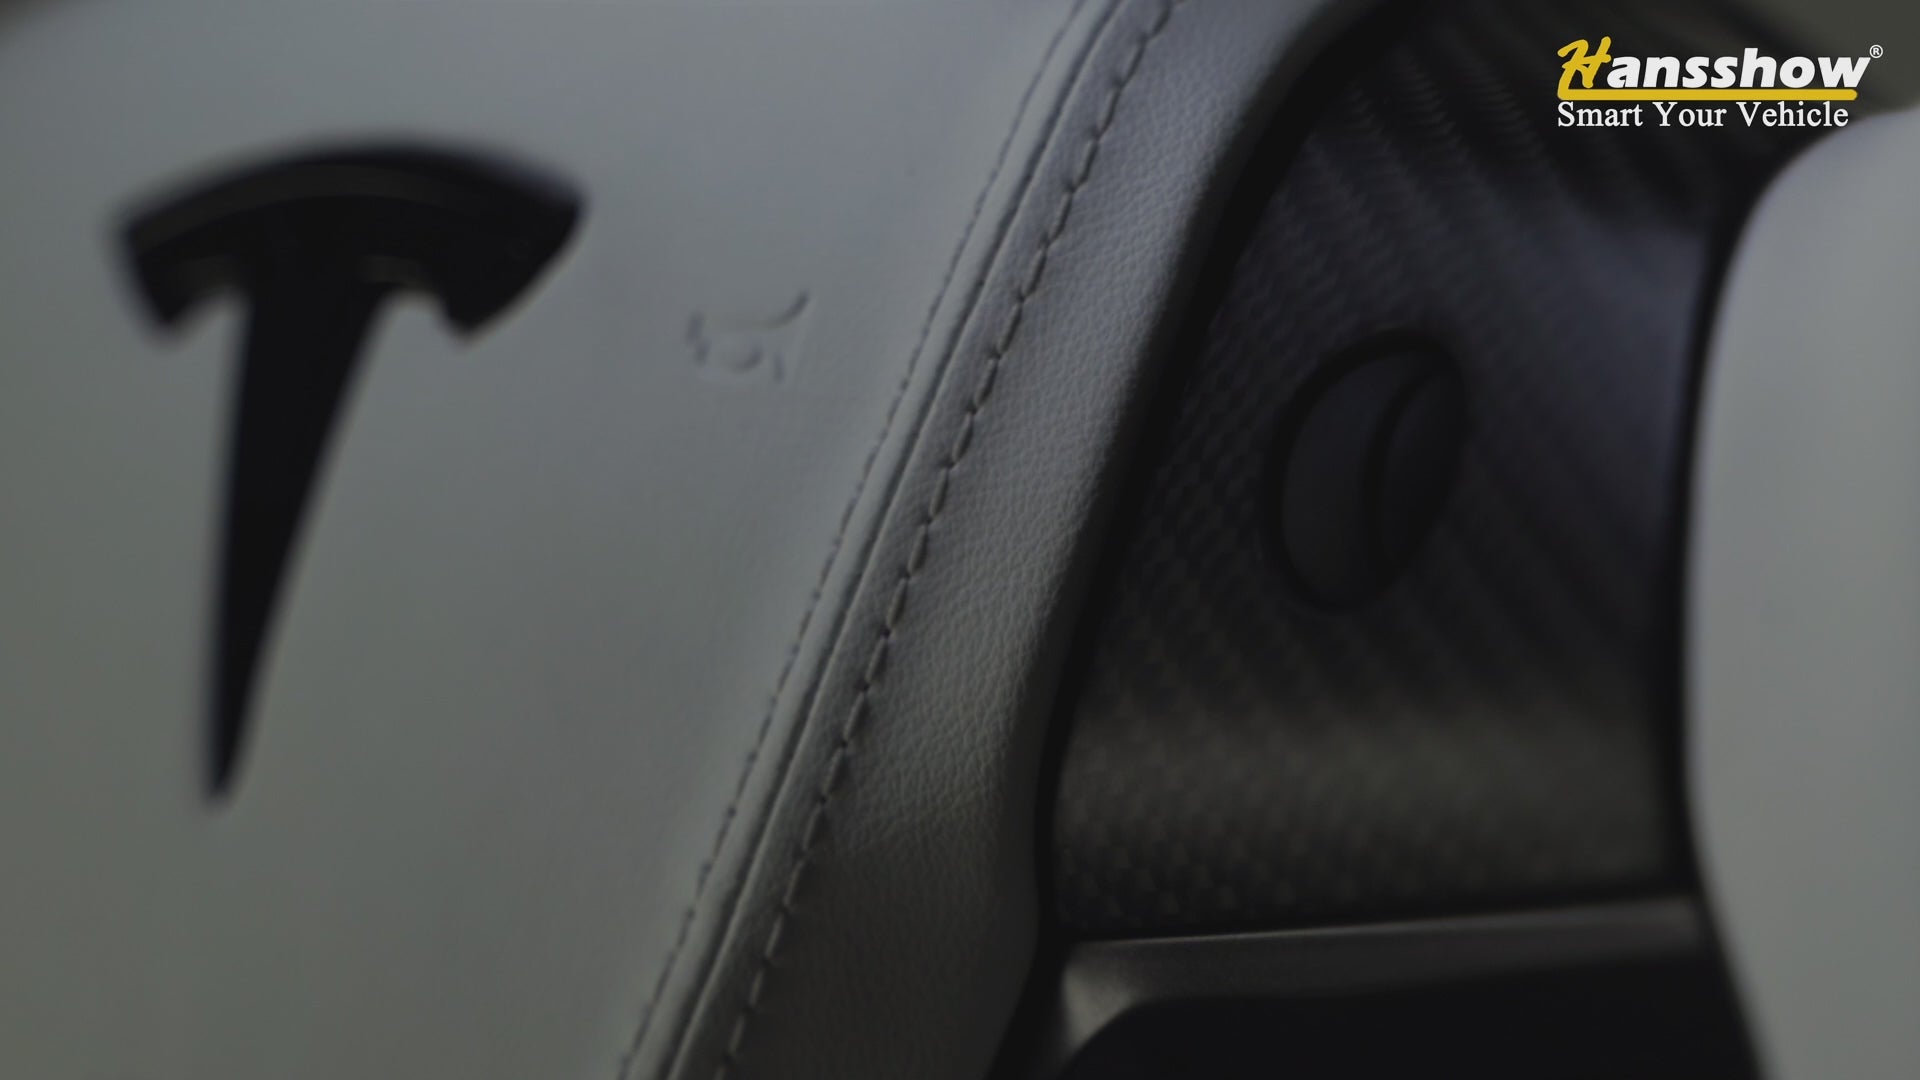  Arcoche Steering Wheel Cover for Tesla Model 3 Model Y  2017-2023 Accessories,Carbon Fiber Steering Wheel Cover Grip NOT Fit 2024 Model  3 Highland(Black Carbon Fiber) : Automotive